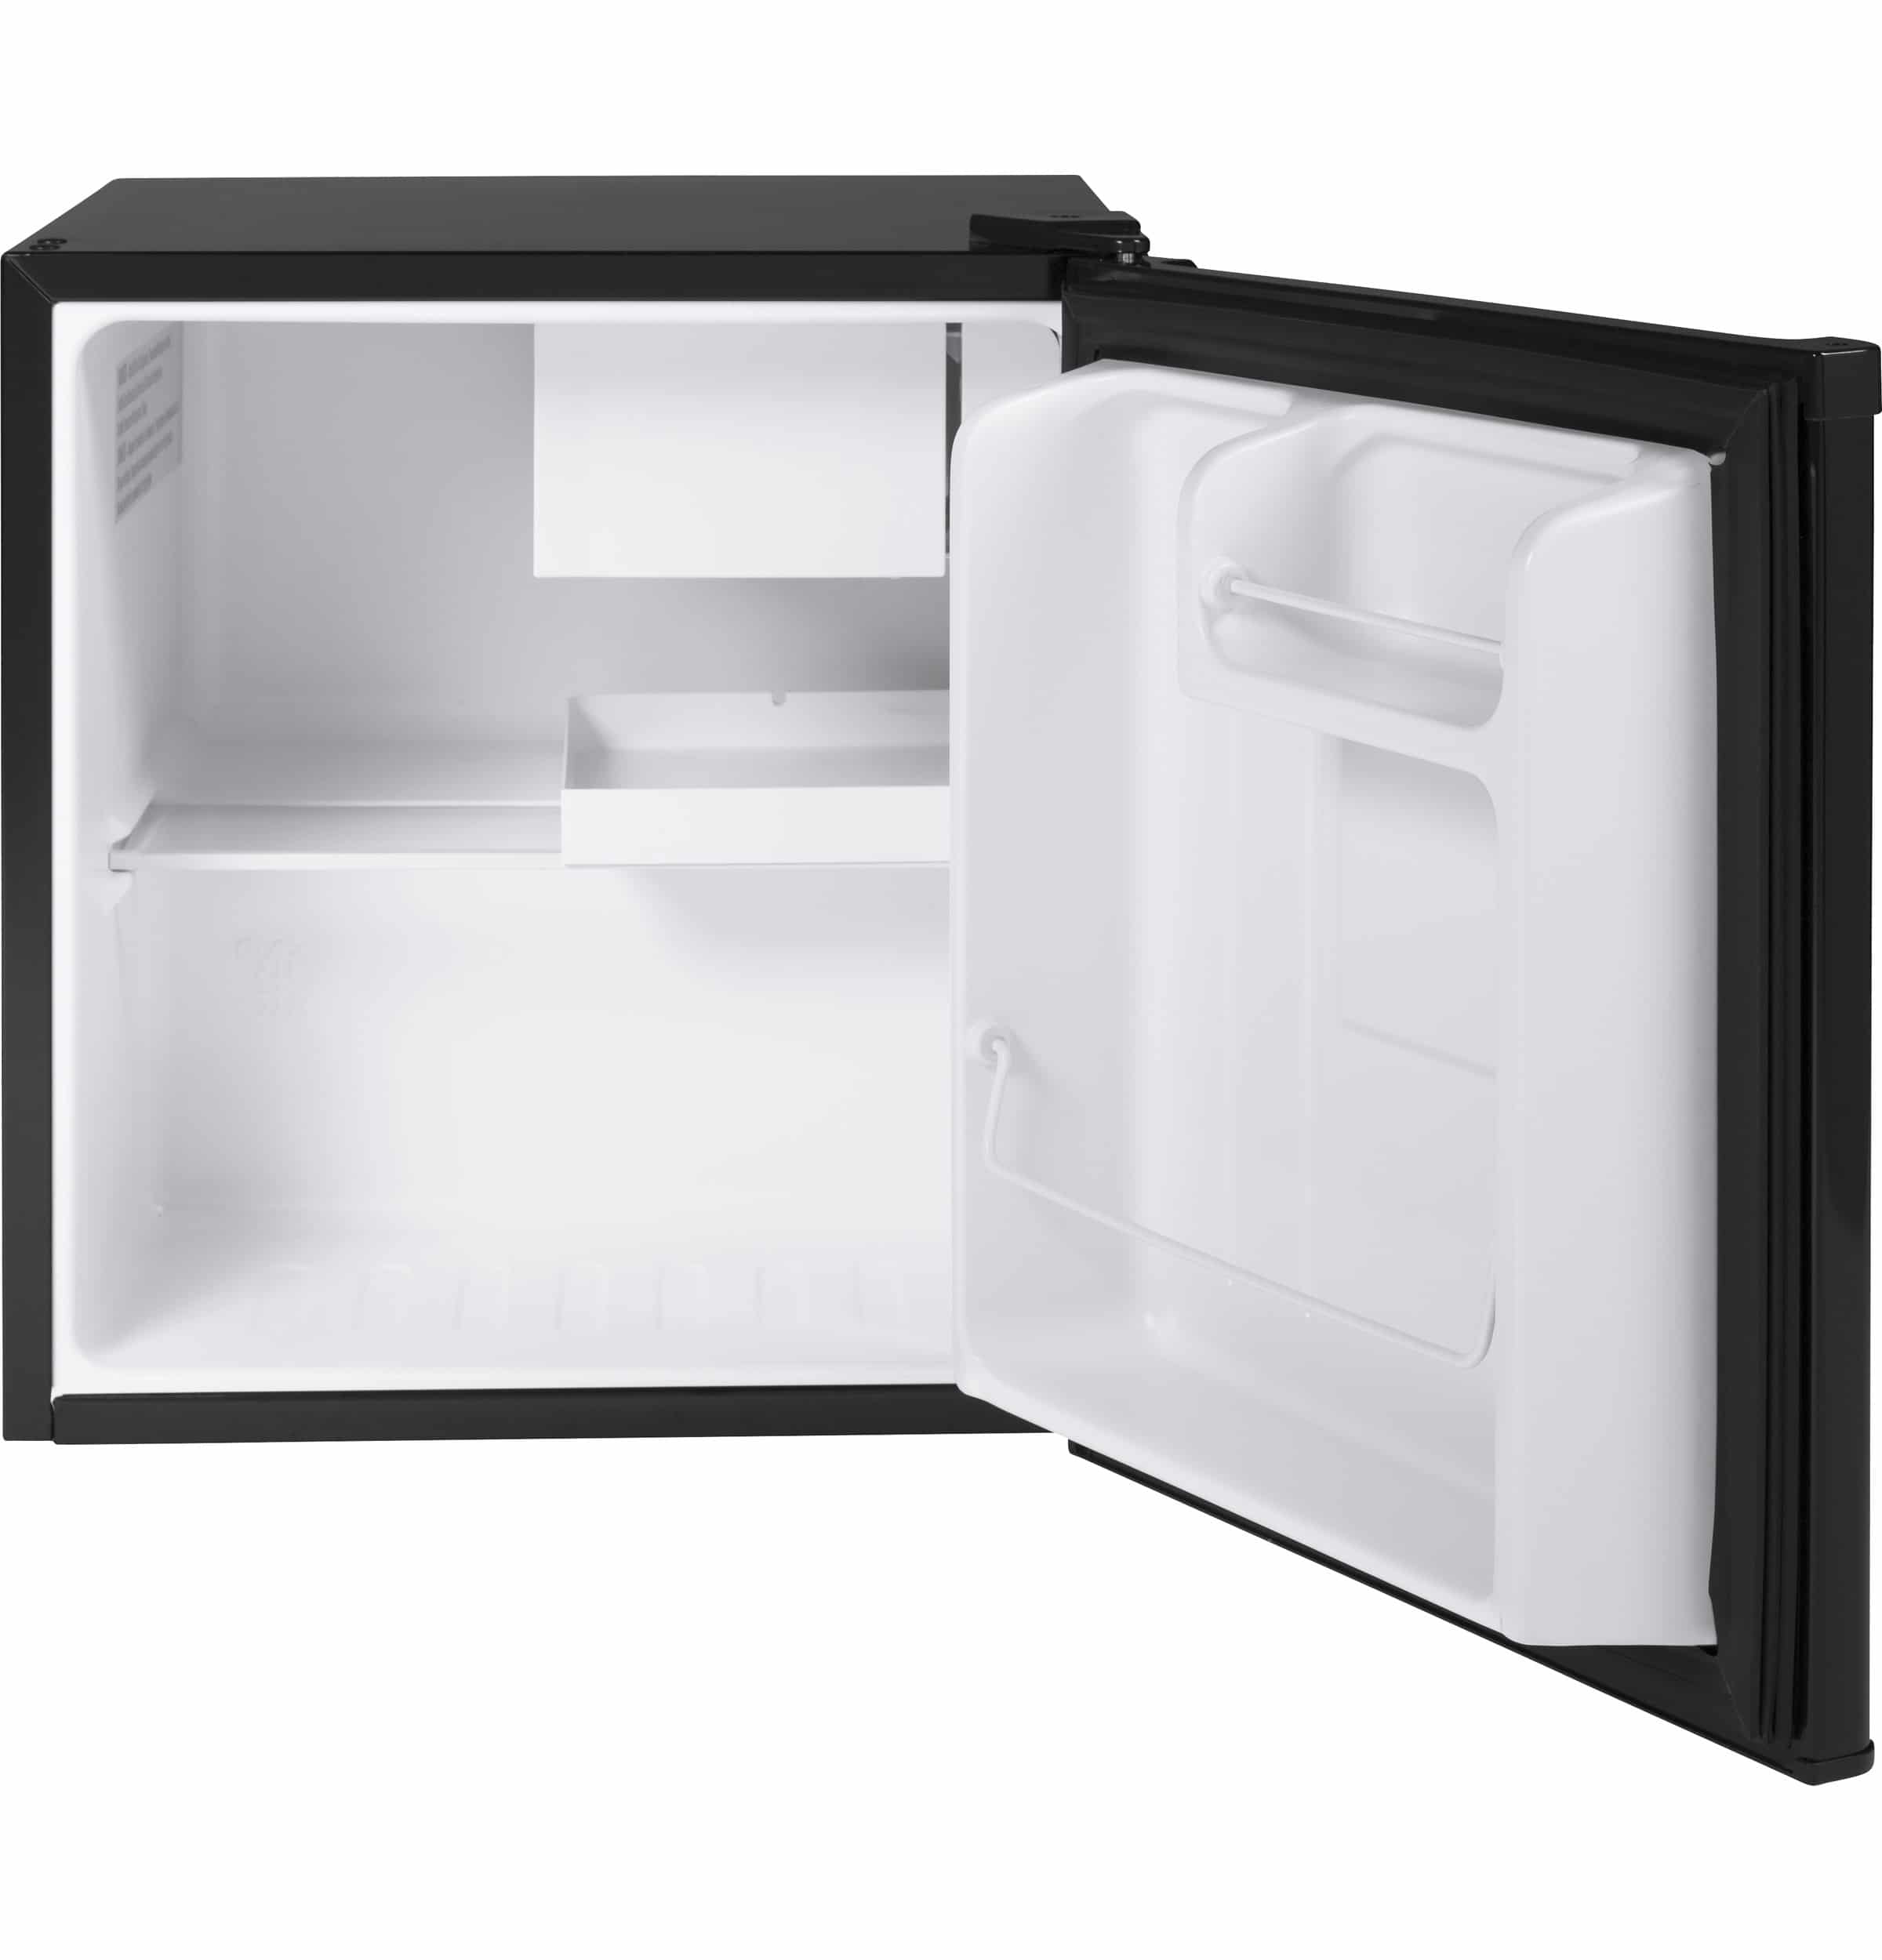 Haier Compact 1.7 Cu. FT Mini Refrigerator - CorpCom Exhibits & Events